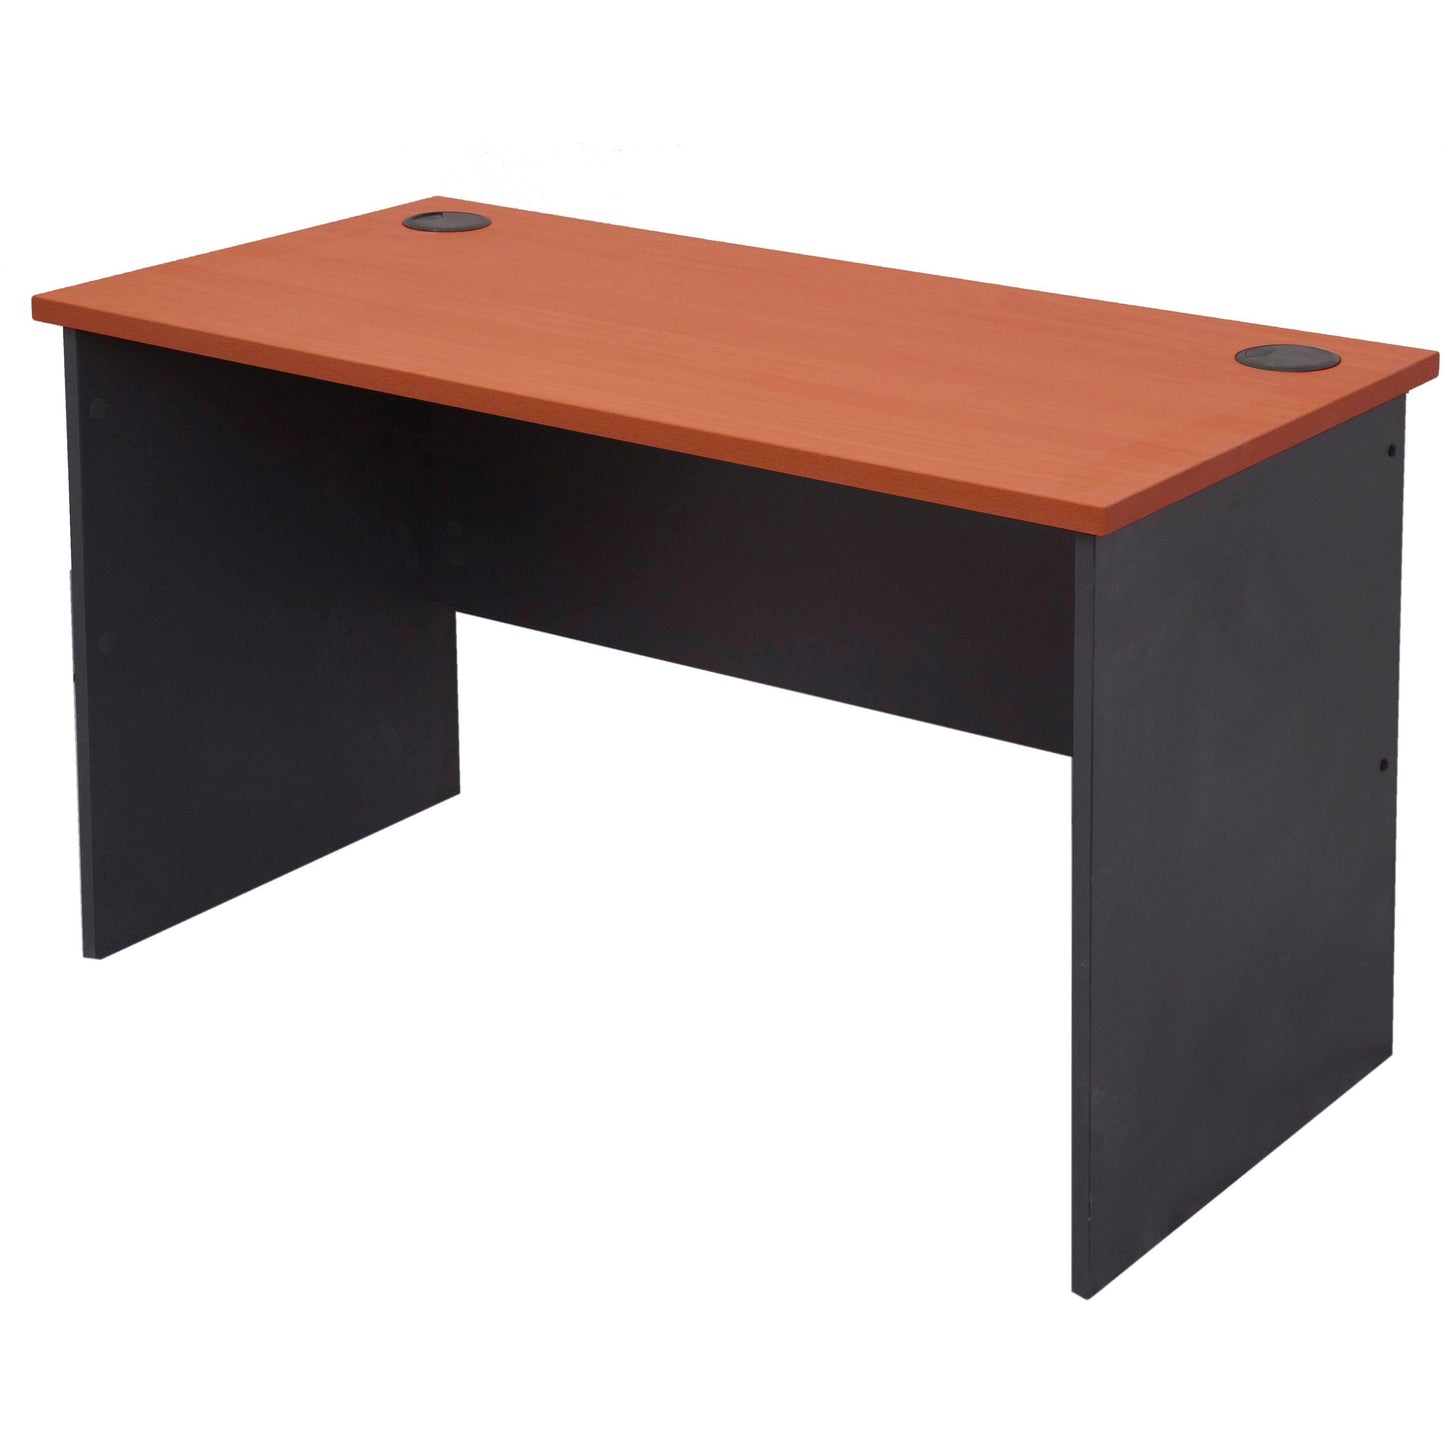 Rapid Worker Office Desk - Office Furniture Company 